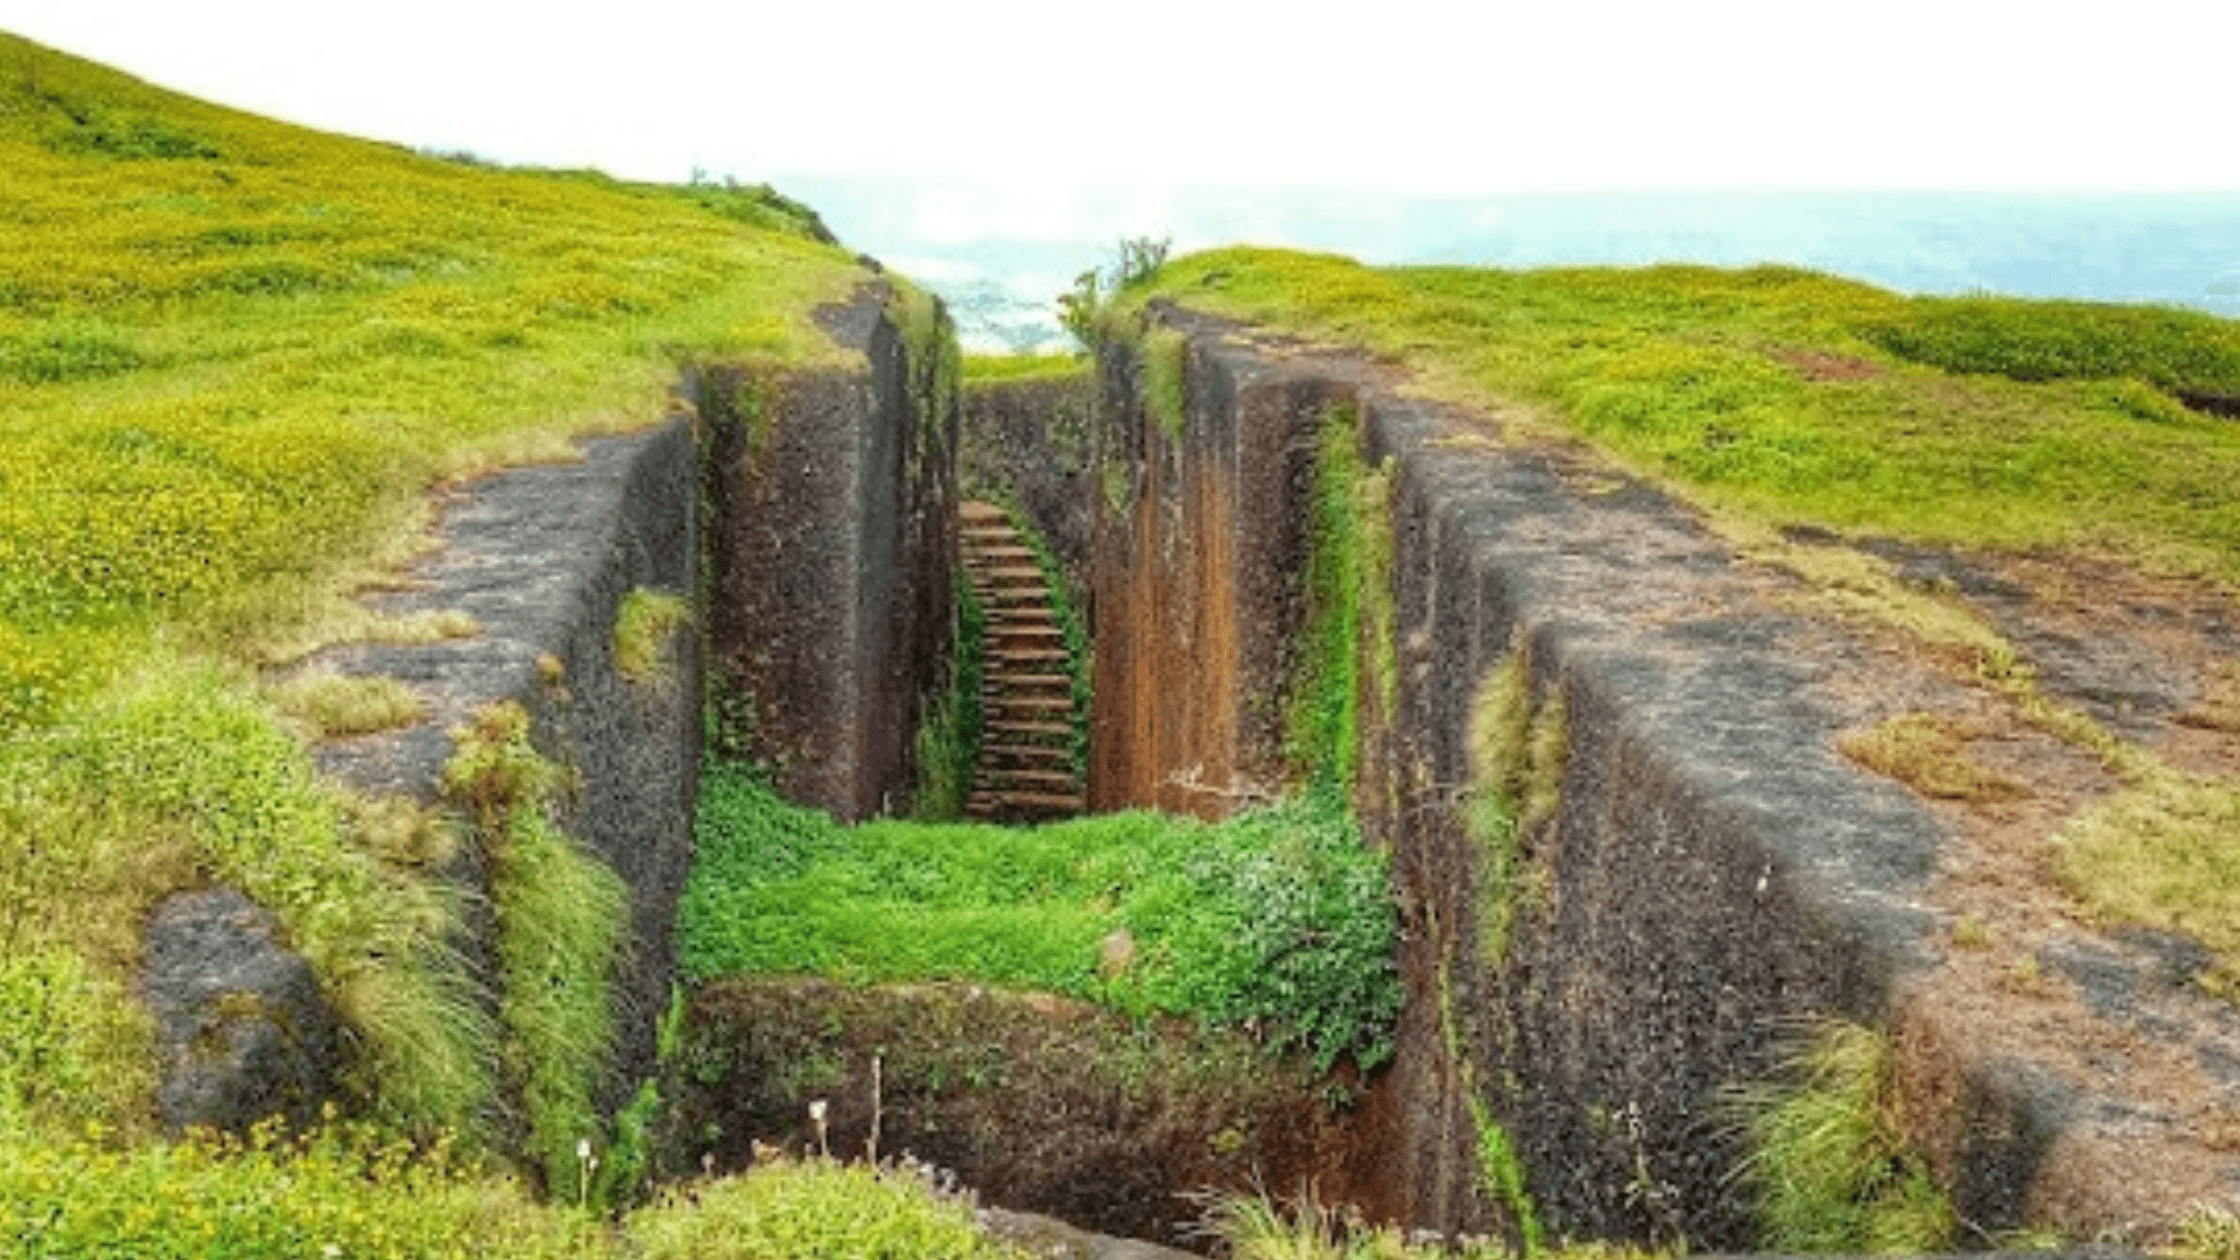 Dategad Fort